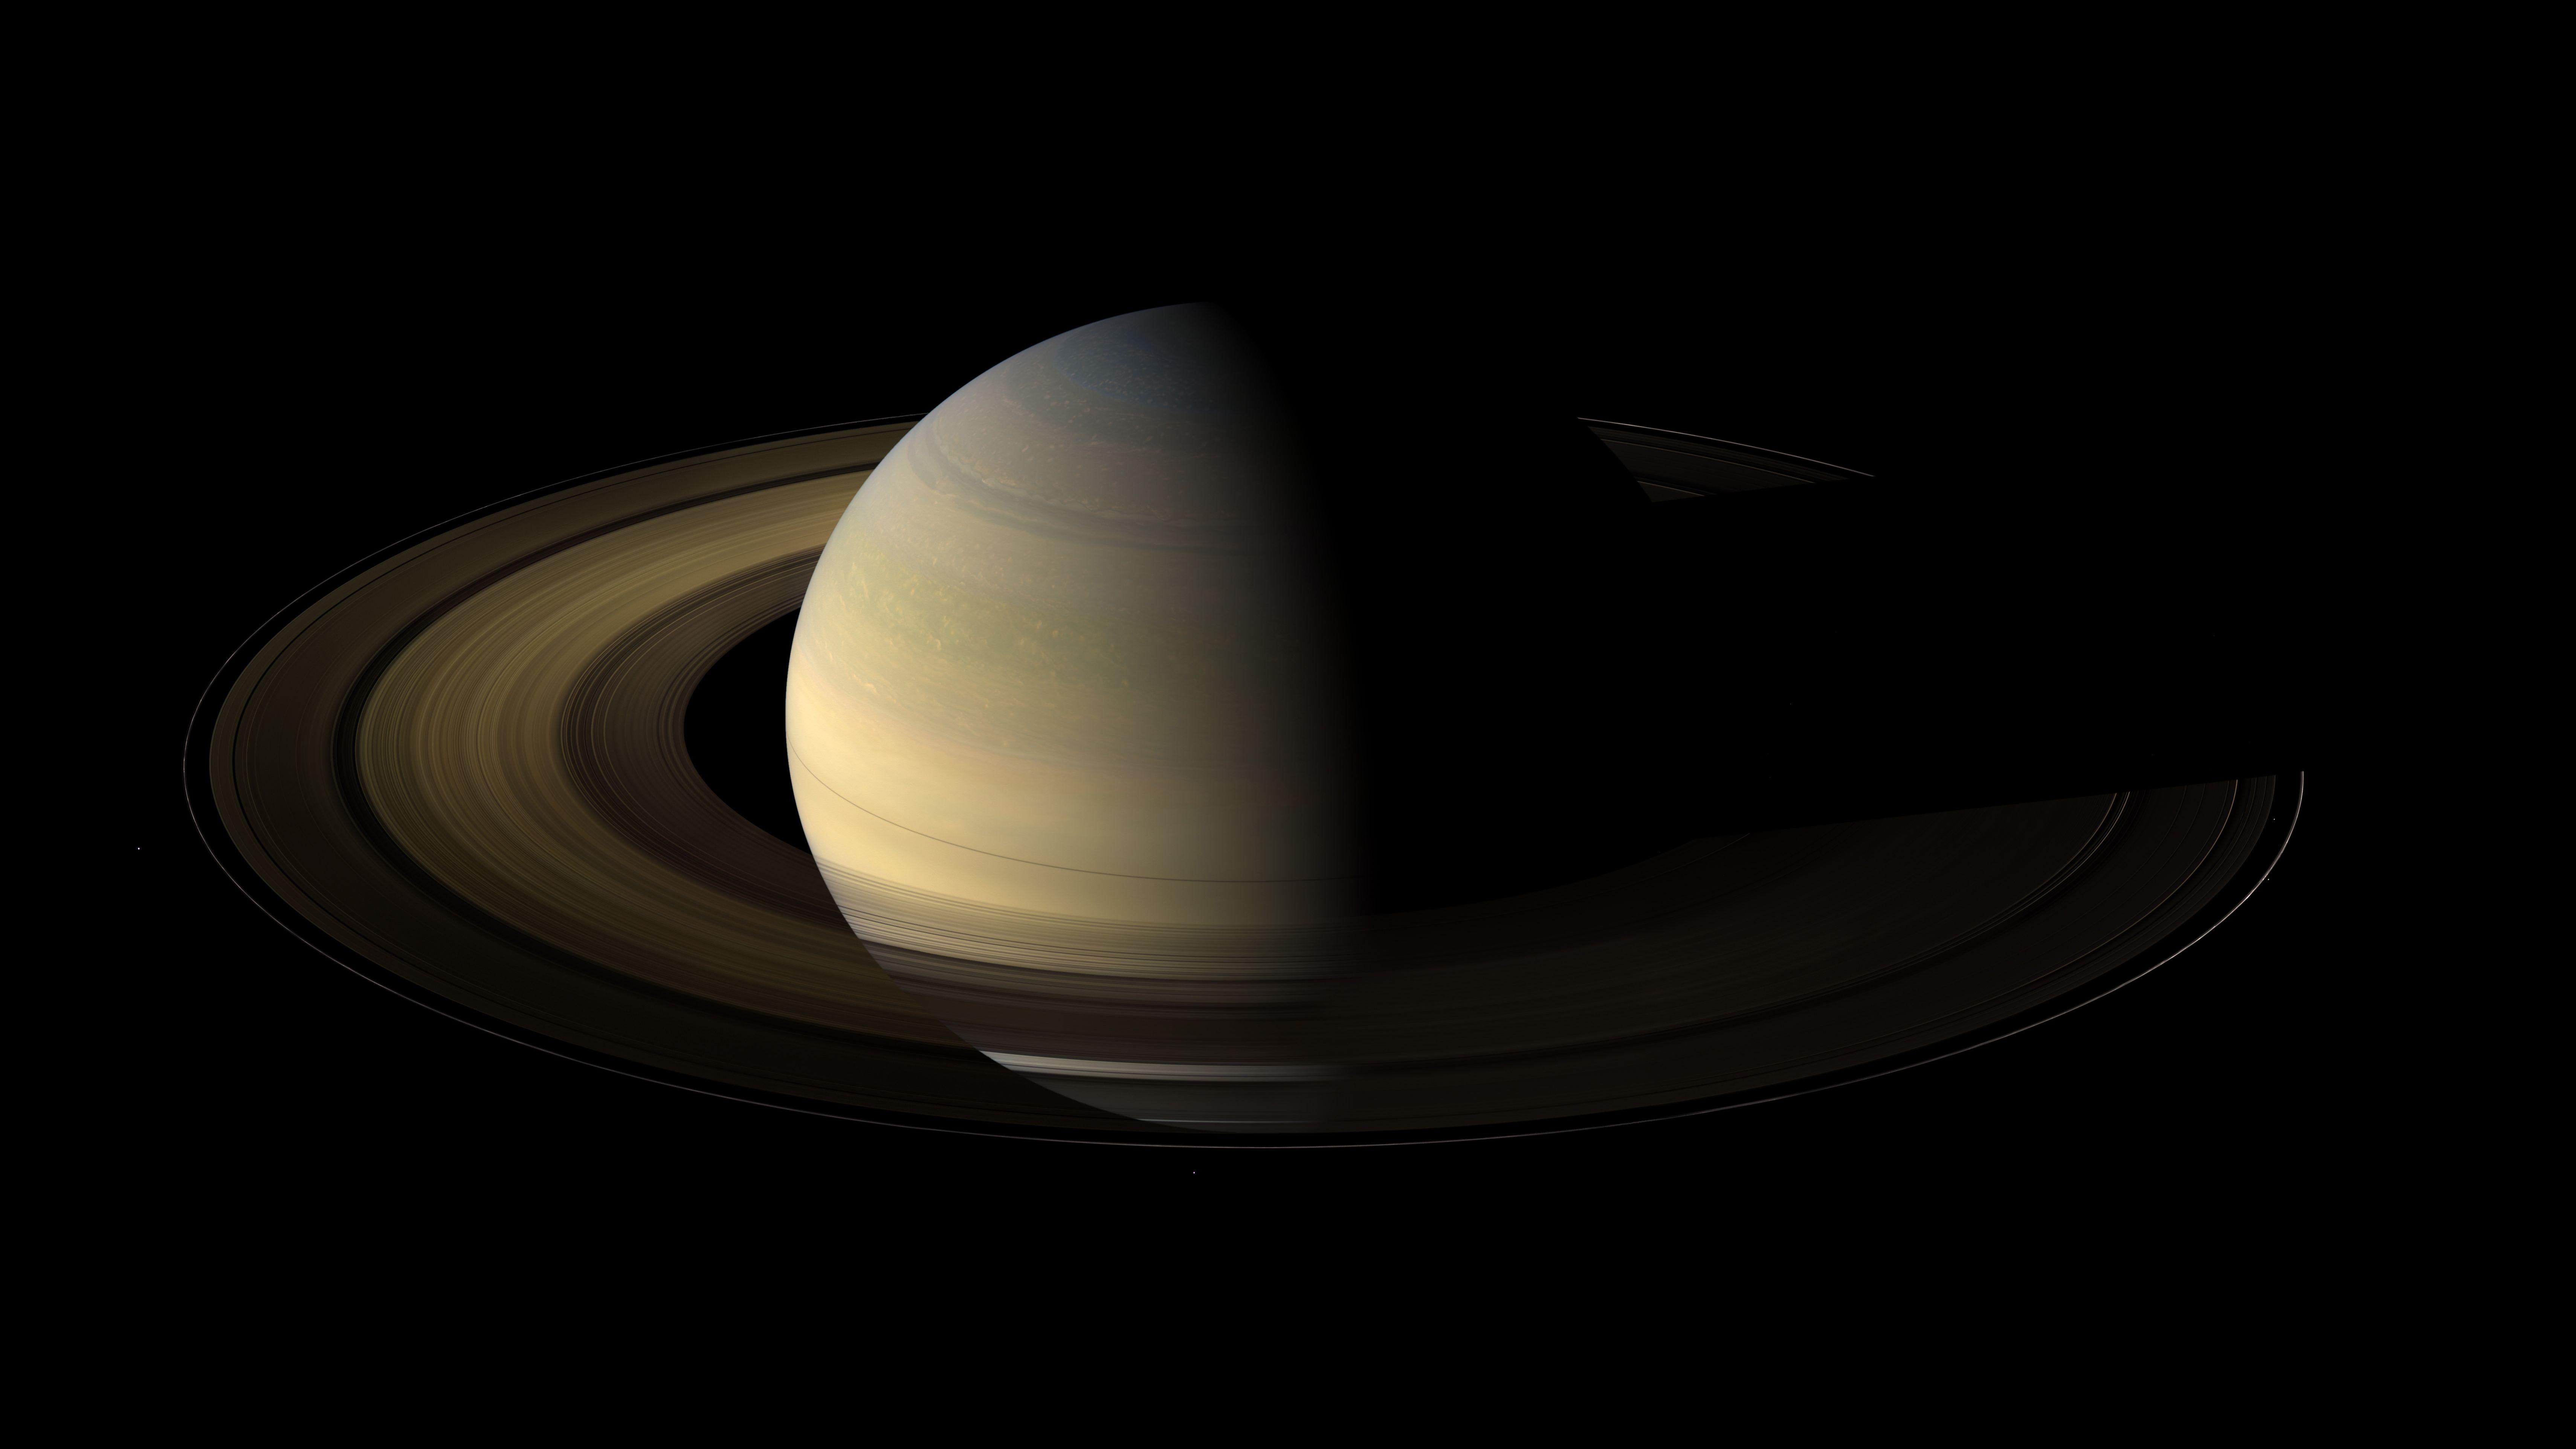 Image Gallery: Cassini Huygens